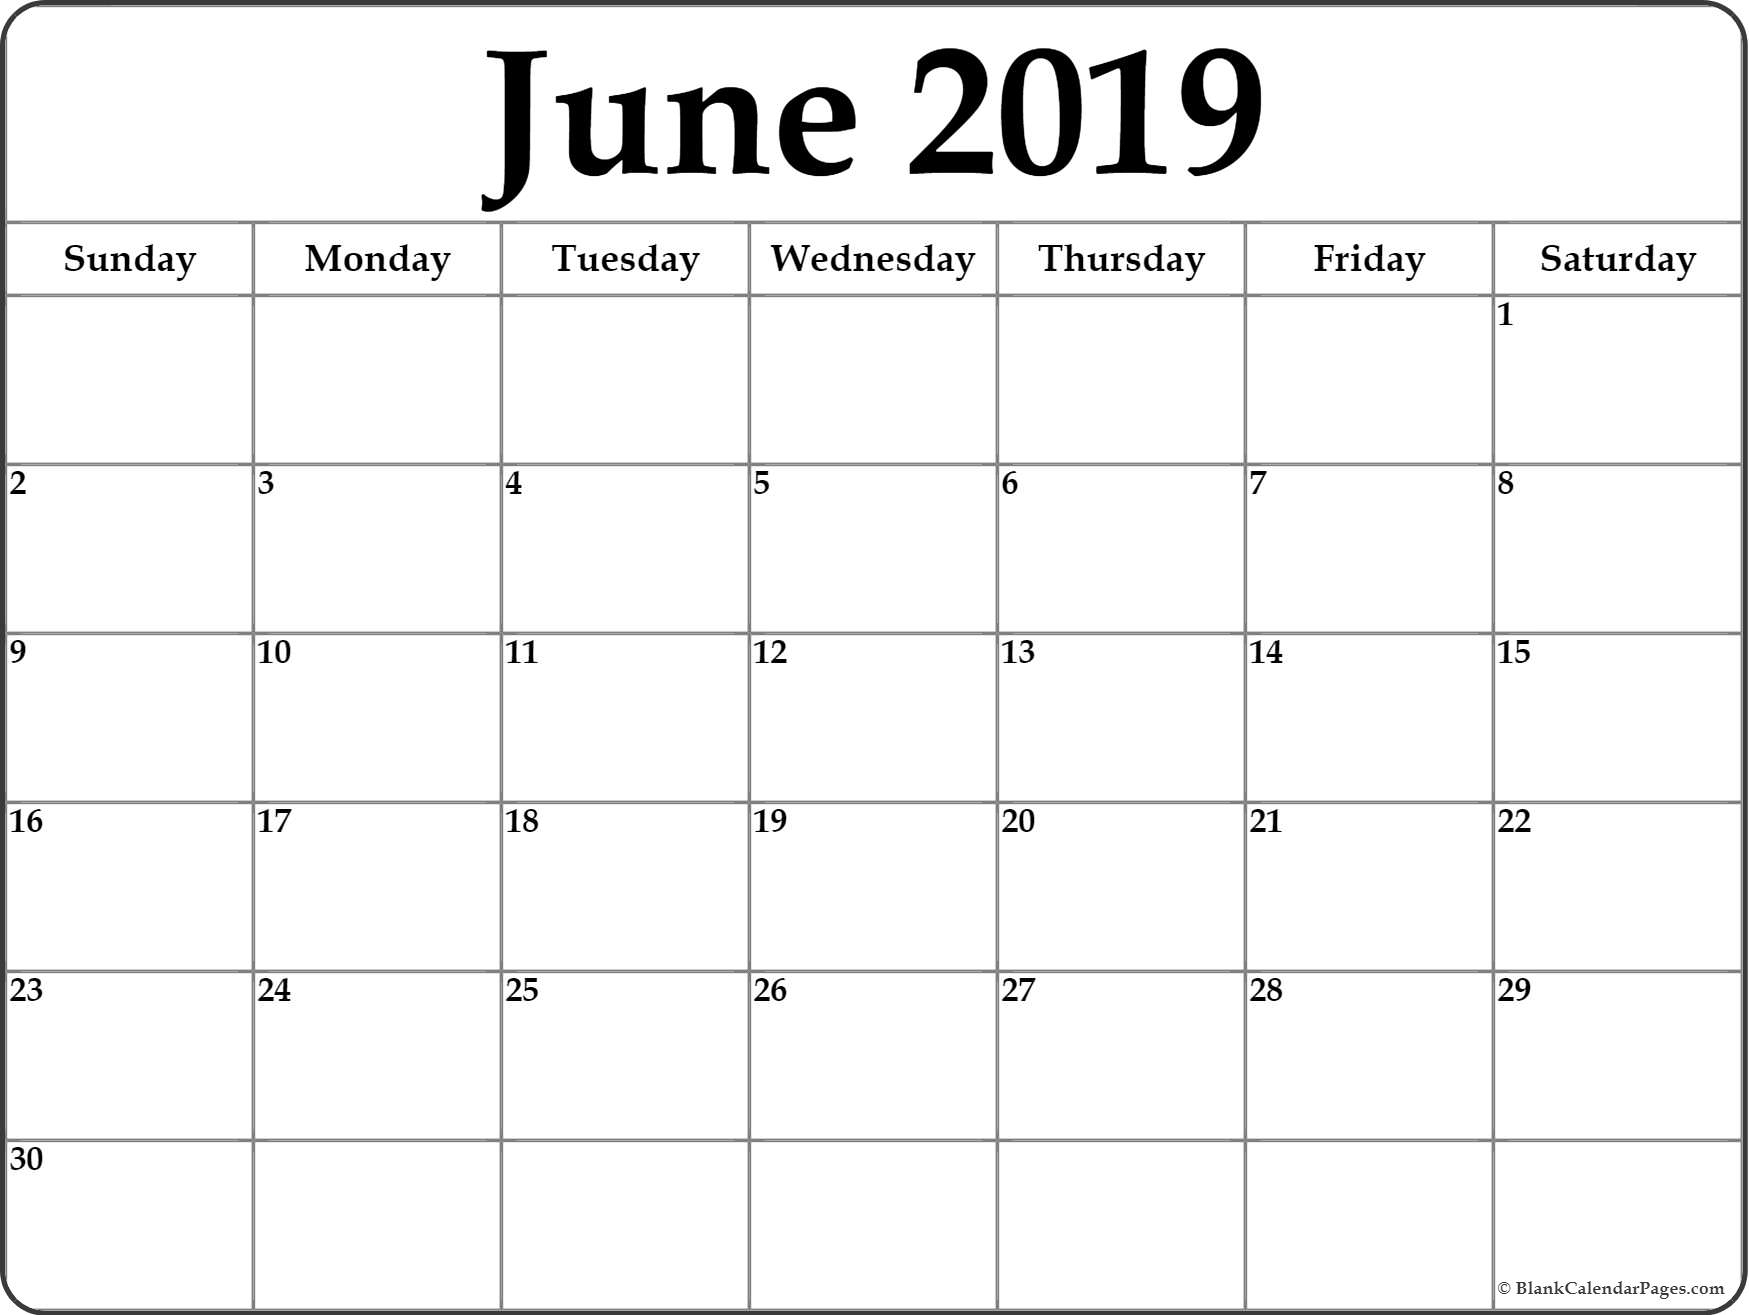 June 2019 Blank Calendar Templates. in Printable June And July Calendar